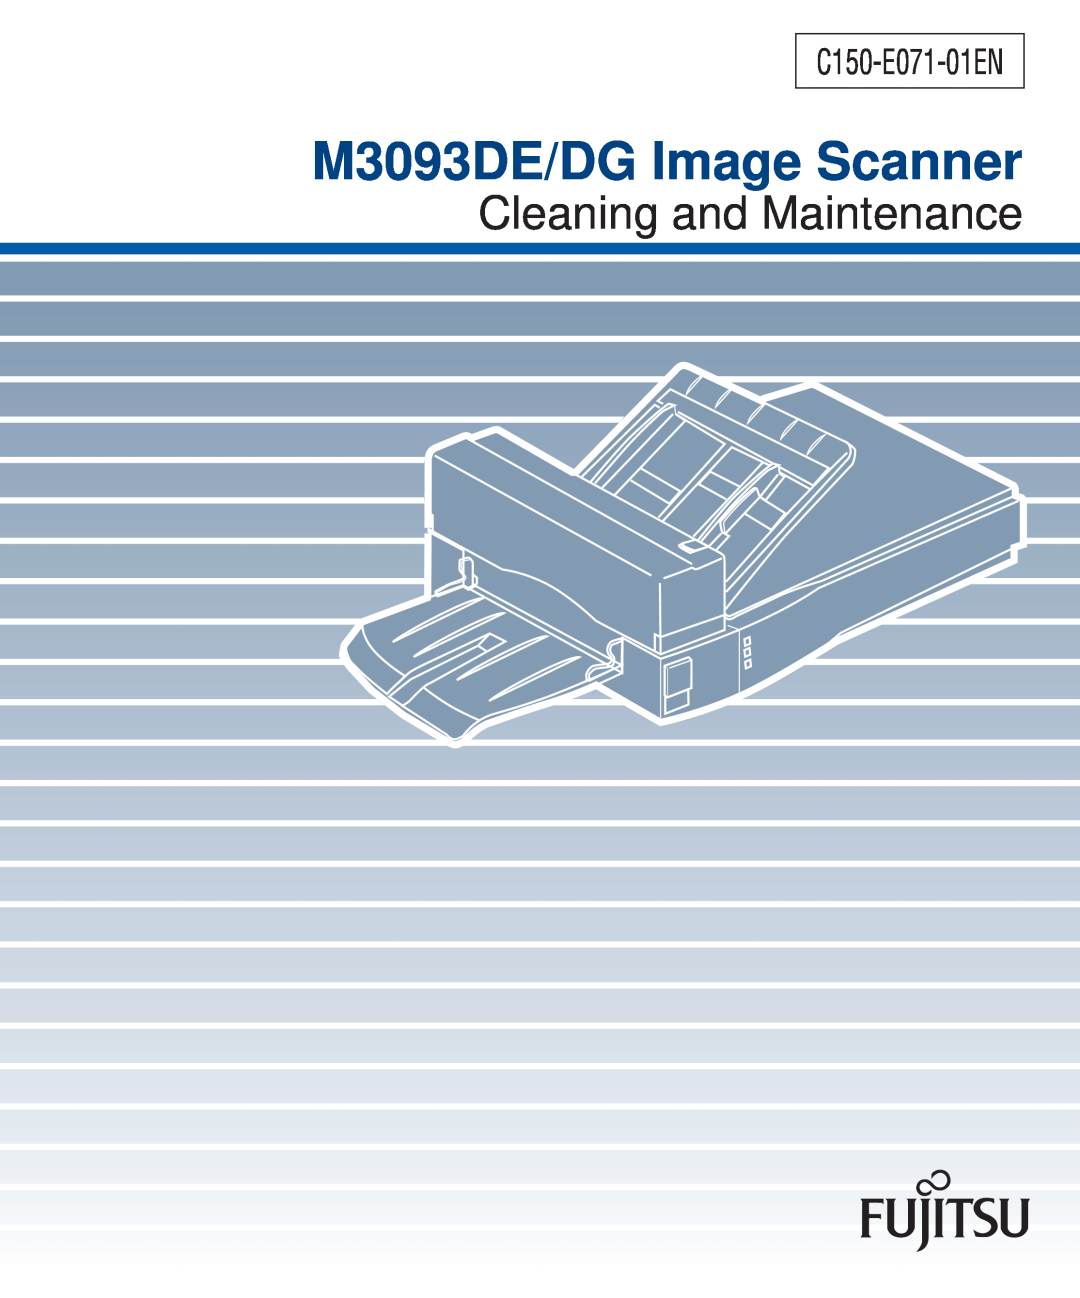 Fujitsu manual M3093DE/DG Image Scanner, Cleaning and Maintenance, C150-E071-01EN 